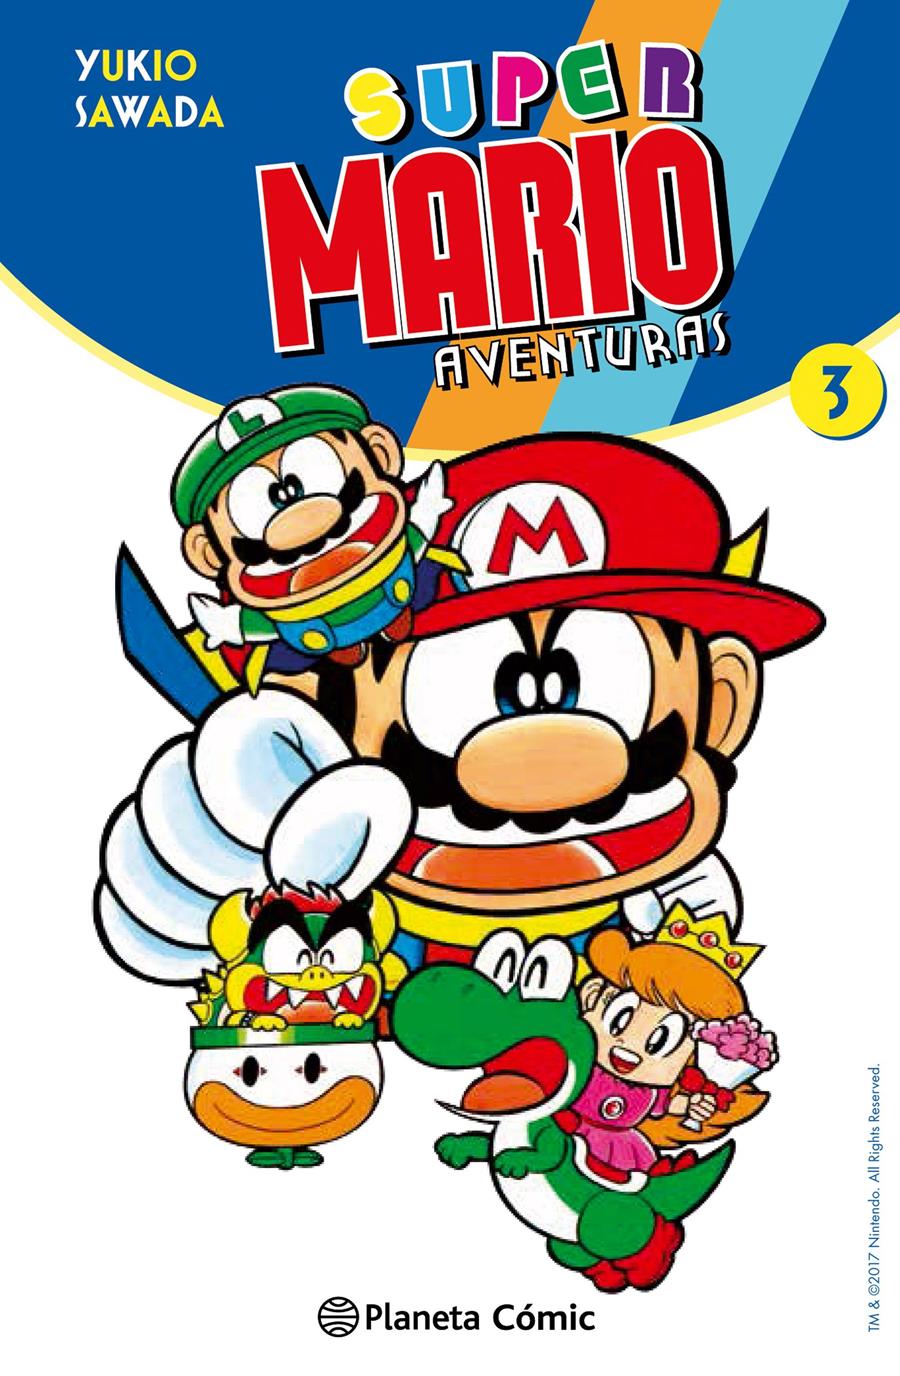 Super Mario nº 03 | N0317-PLAN29 | Yukio Sawada | Terra de Còmic - Tu tienda de cómics online especializada en cómics, manga y merchandising